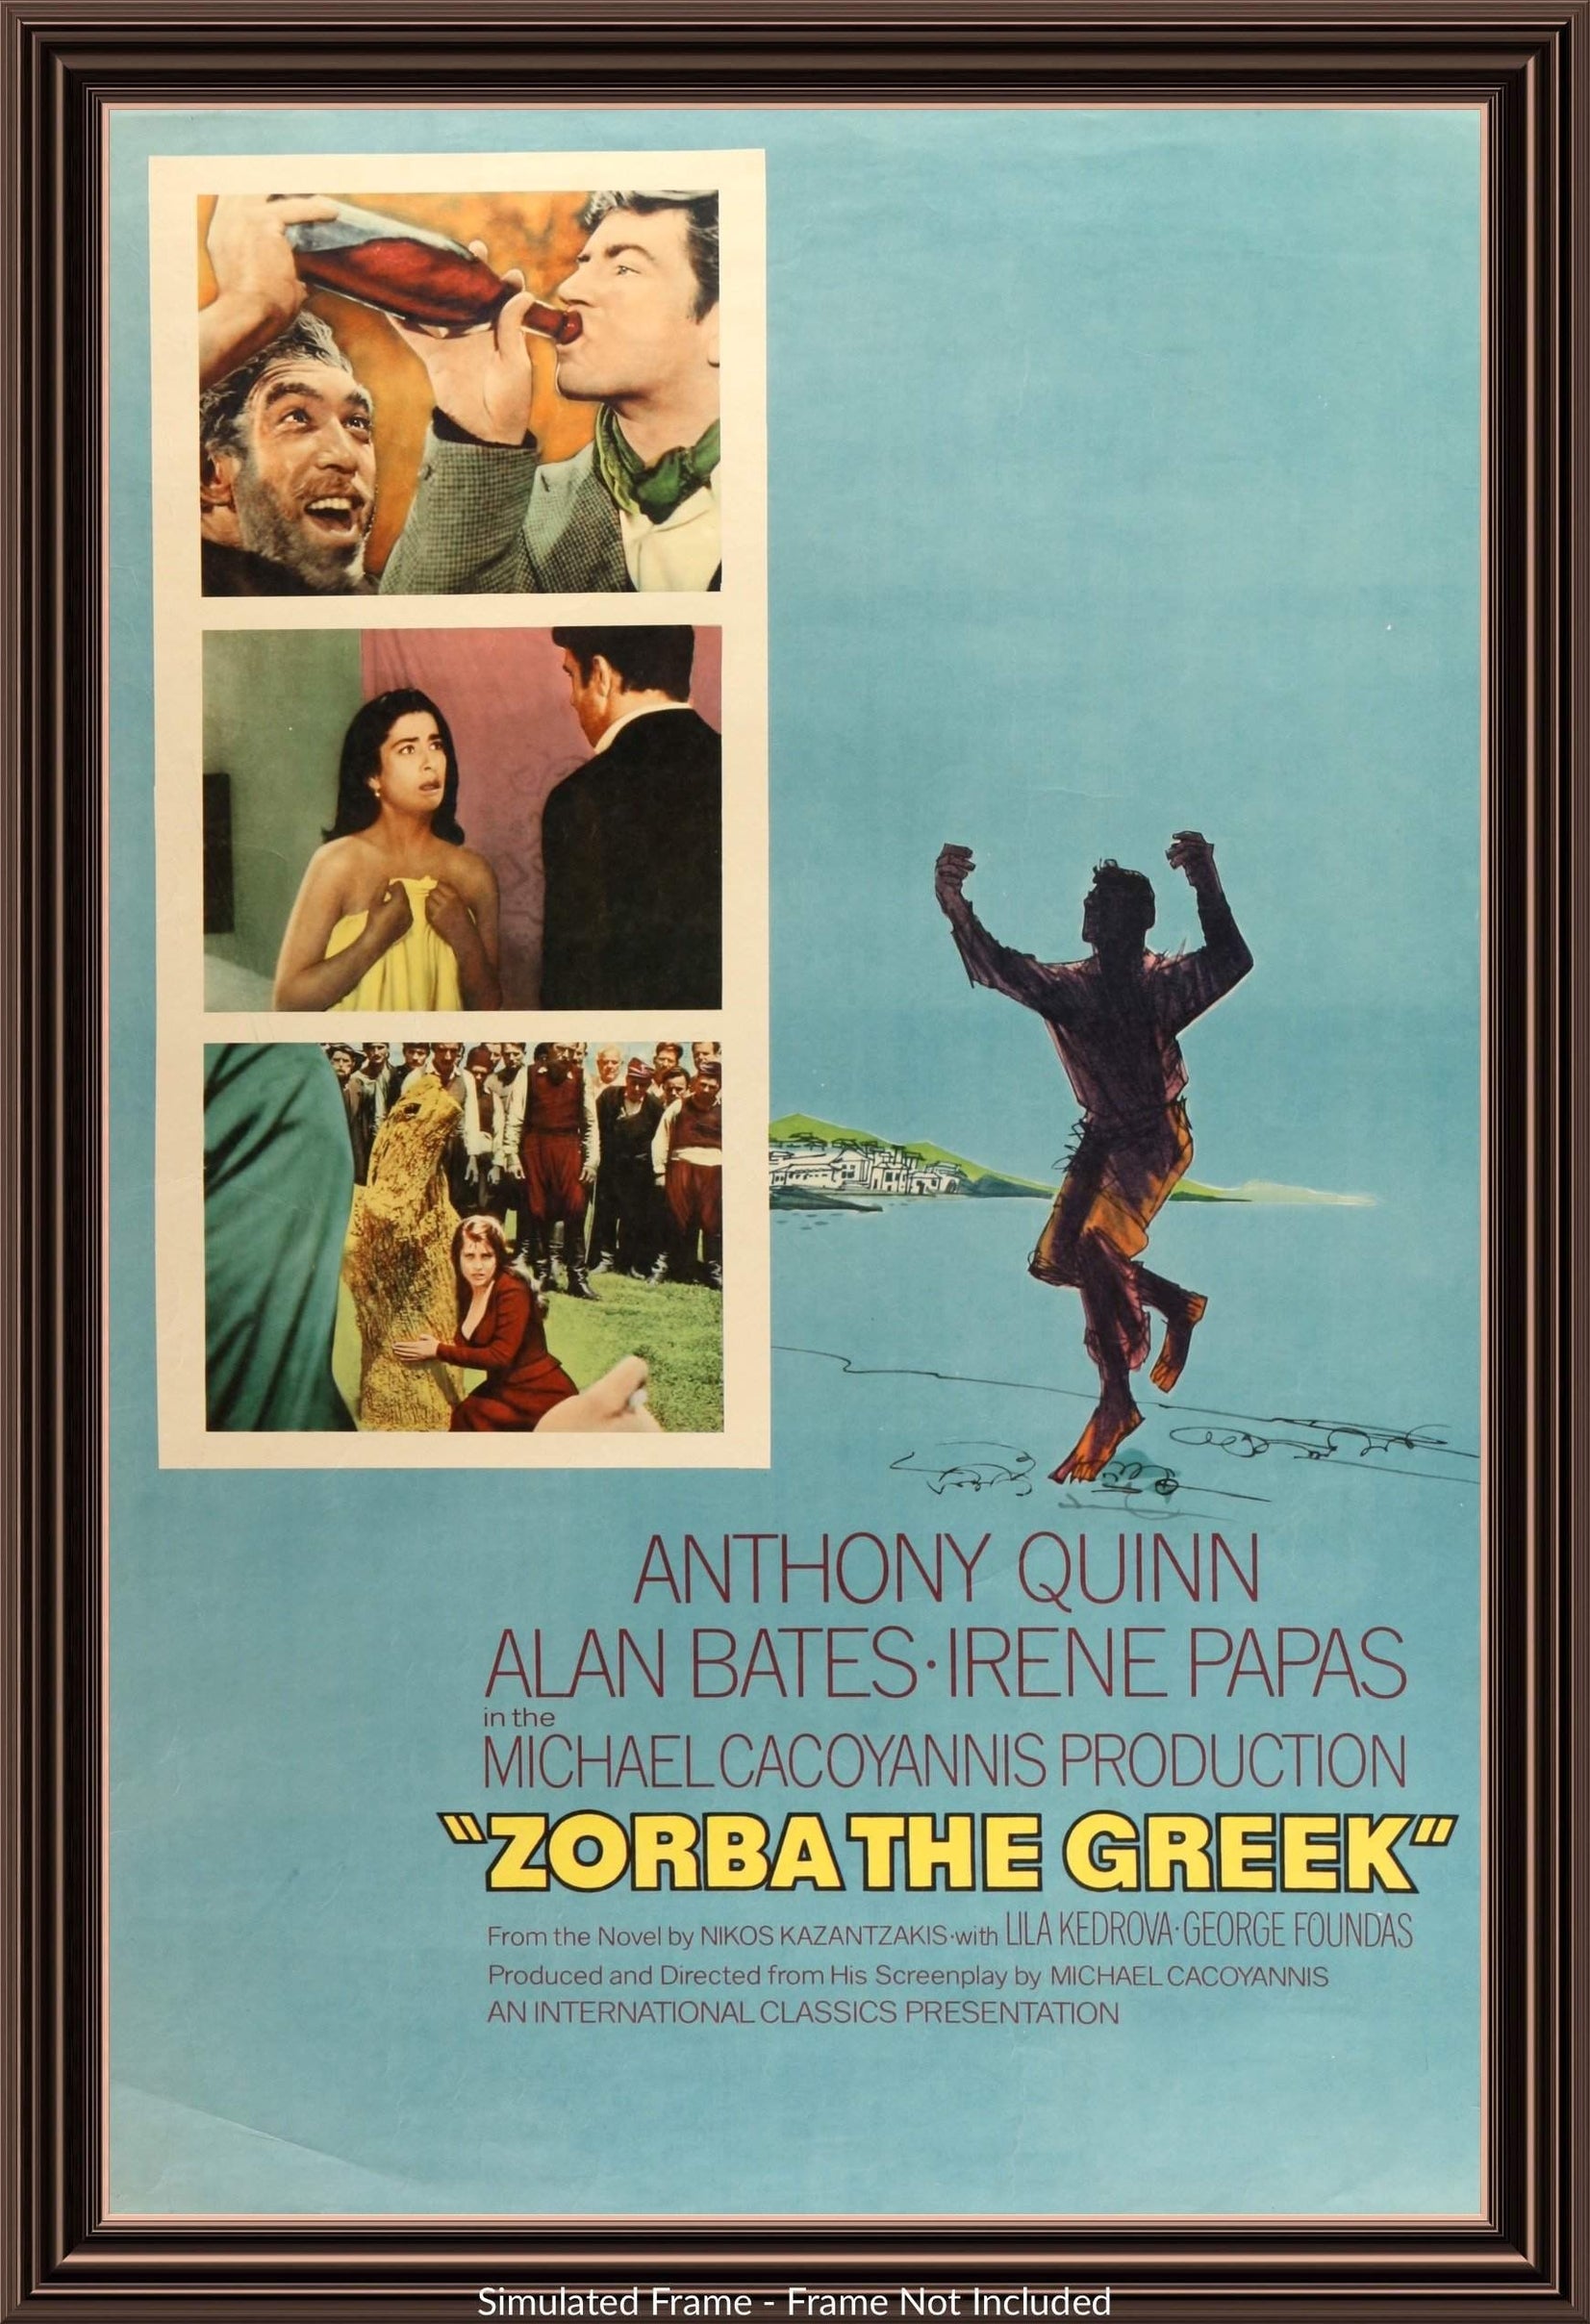 Zorba the Greek (1964) original movie poster for sale at Original Film Art